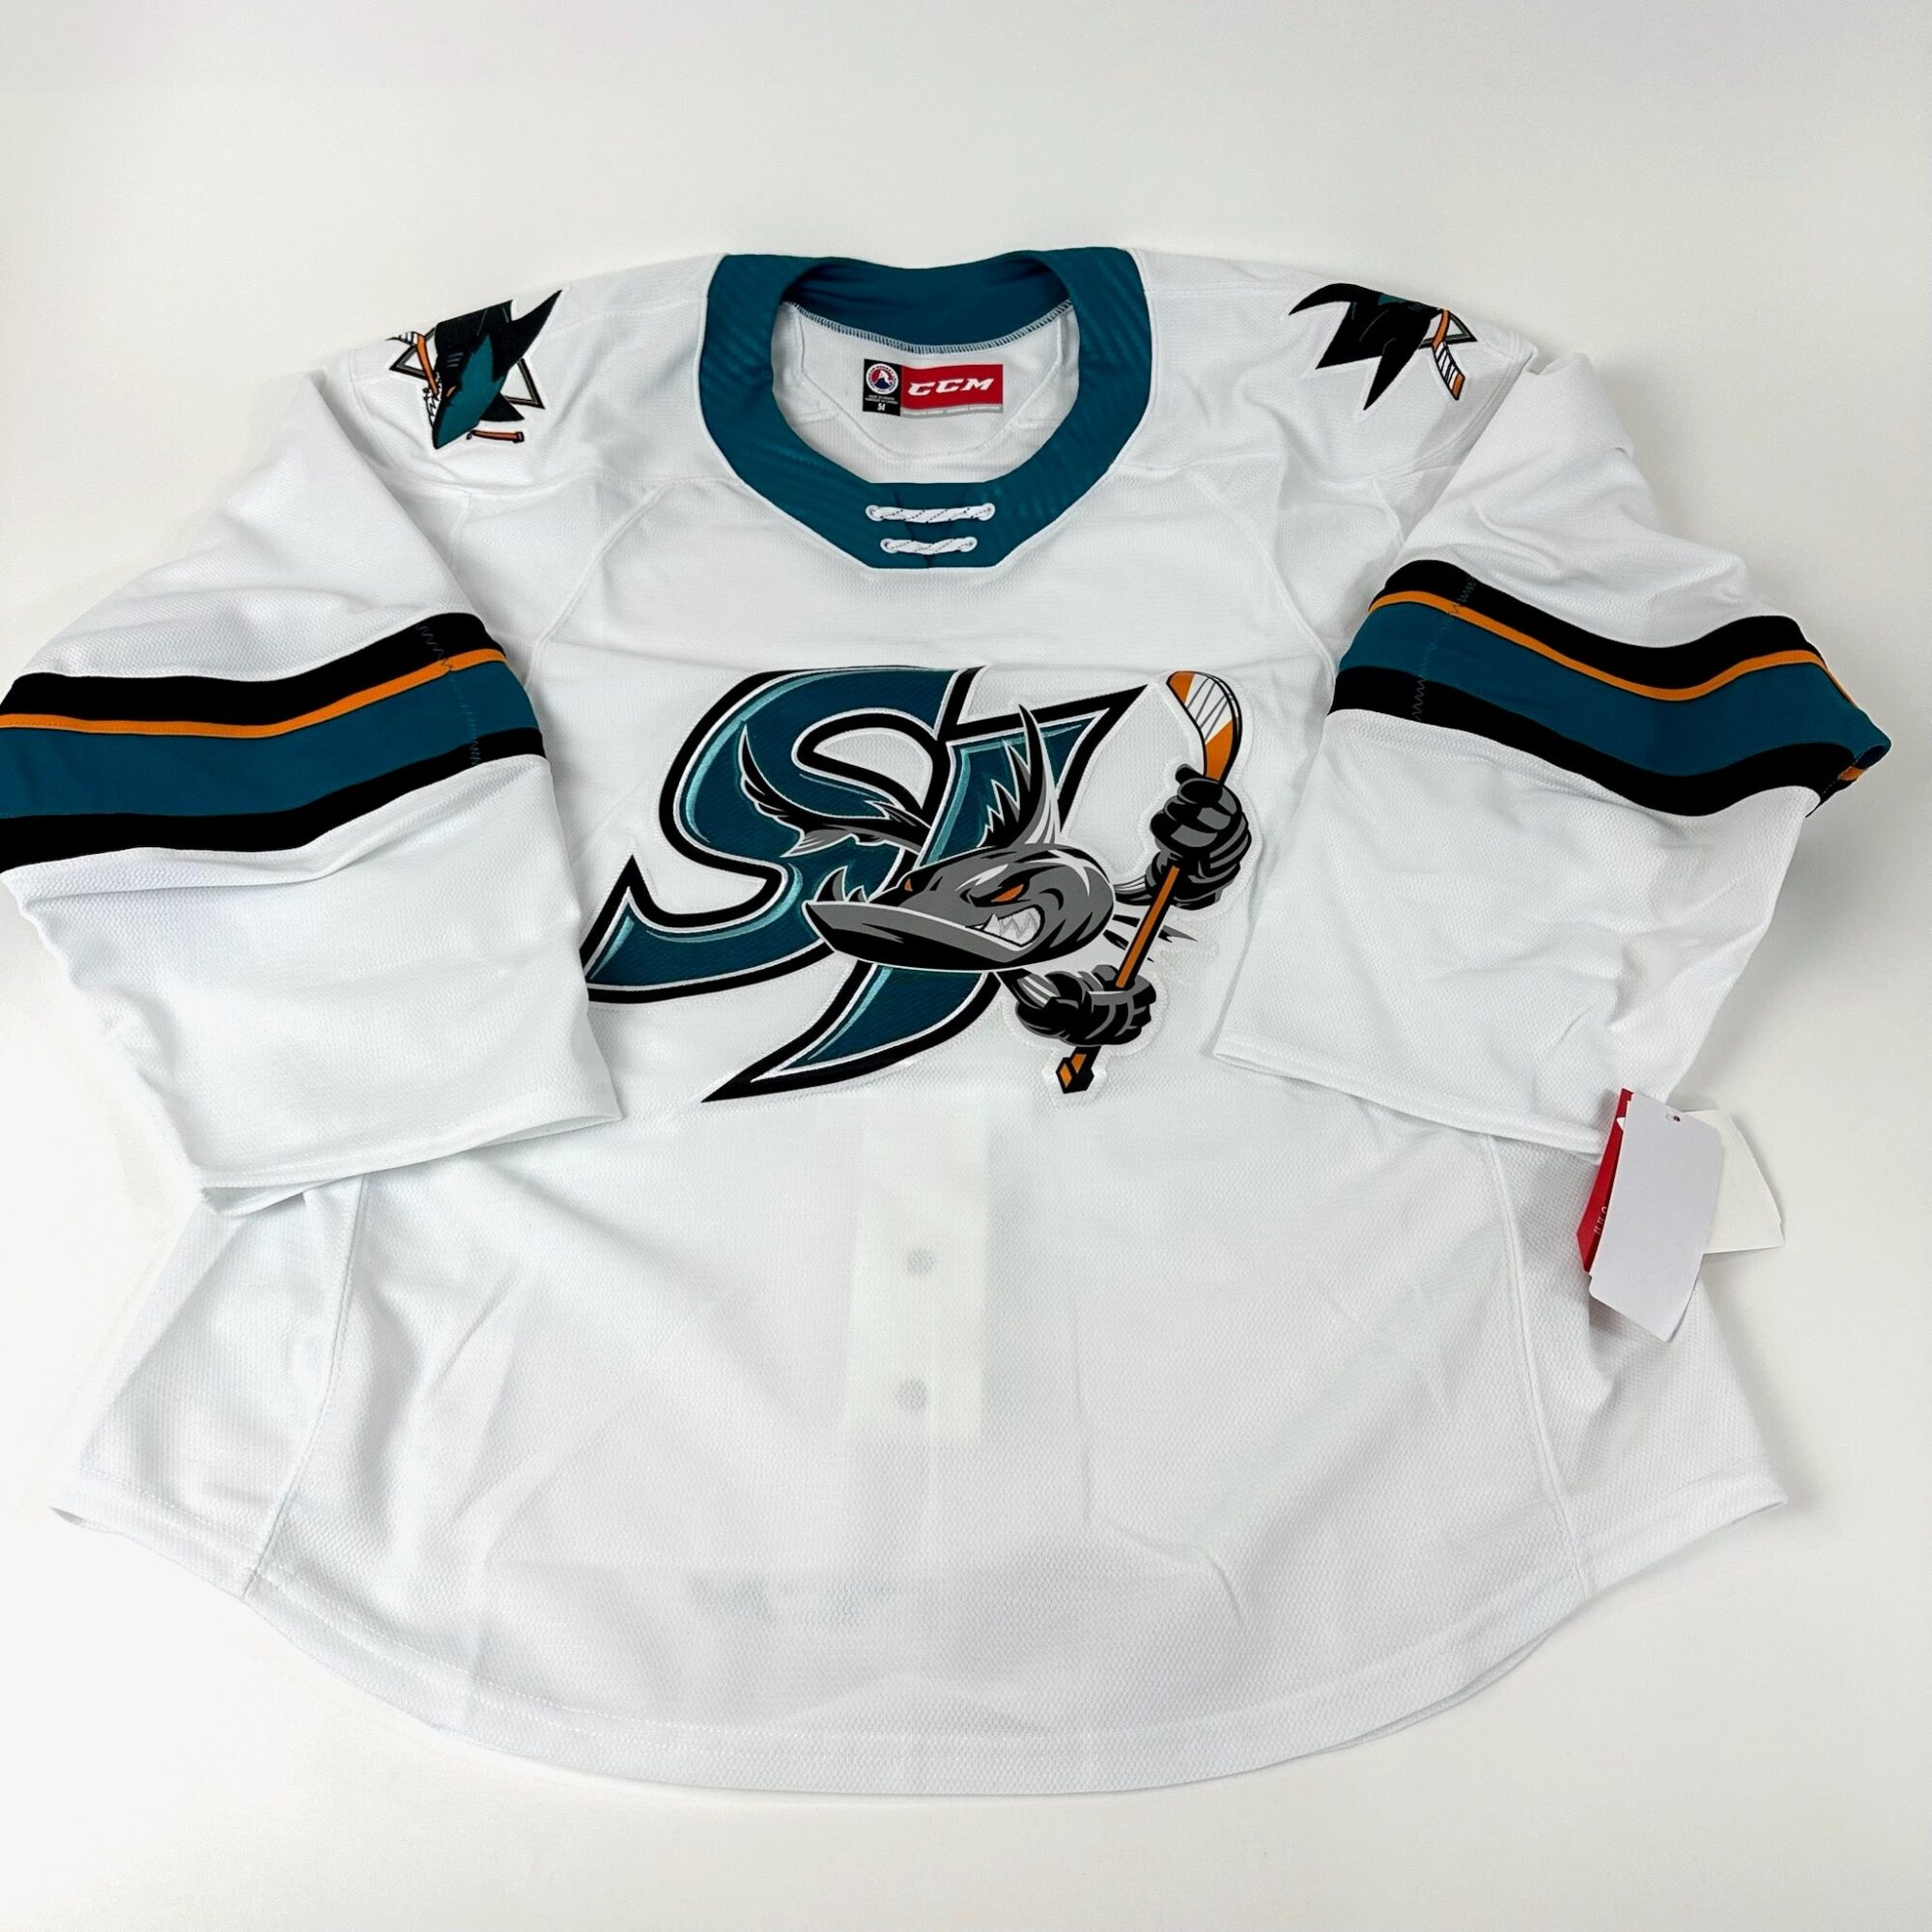 Supreme hockey jersey shirt - Gem